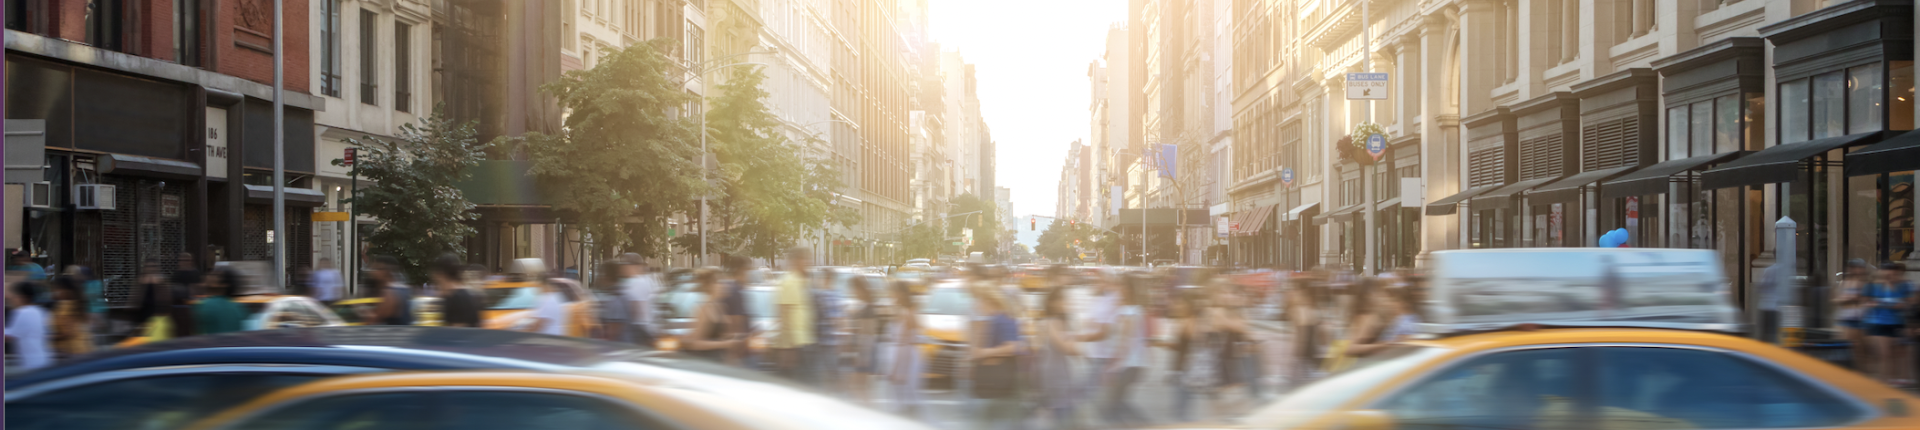 Image of New York City Street